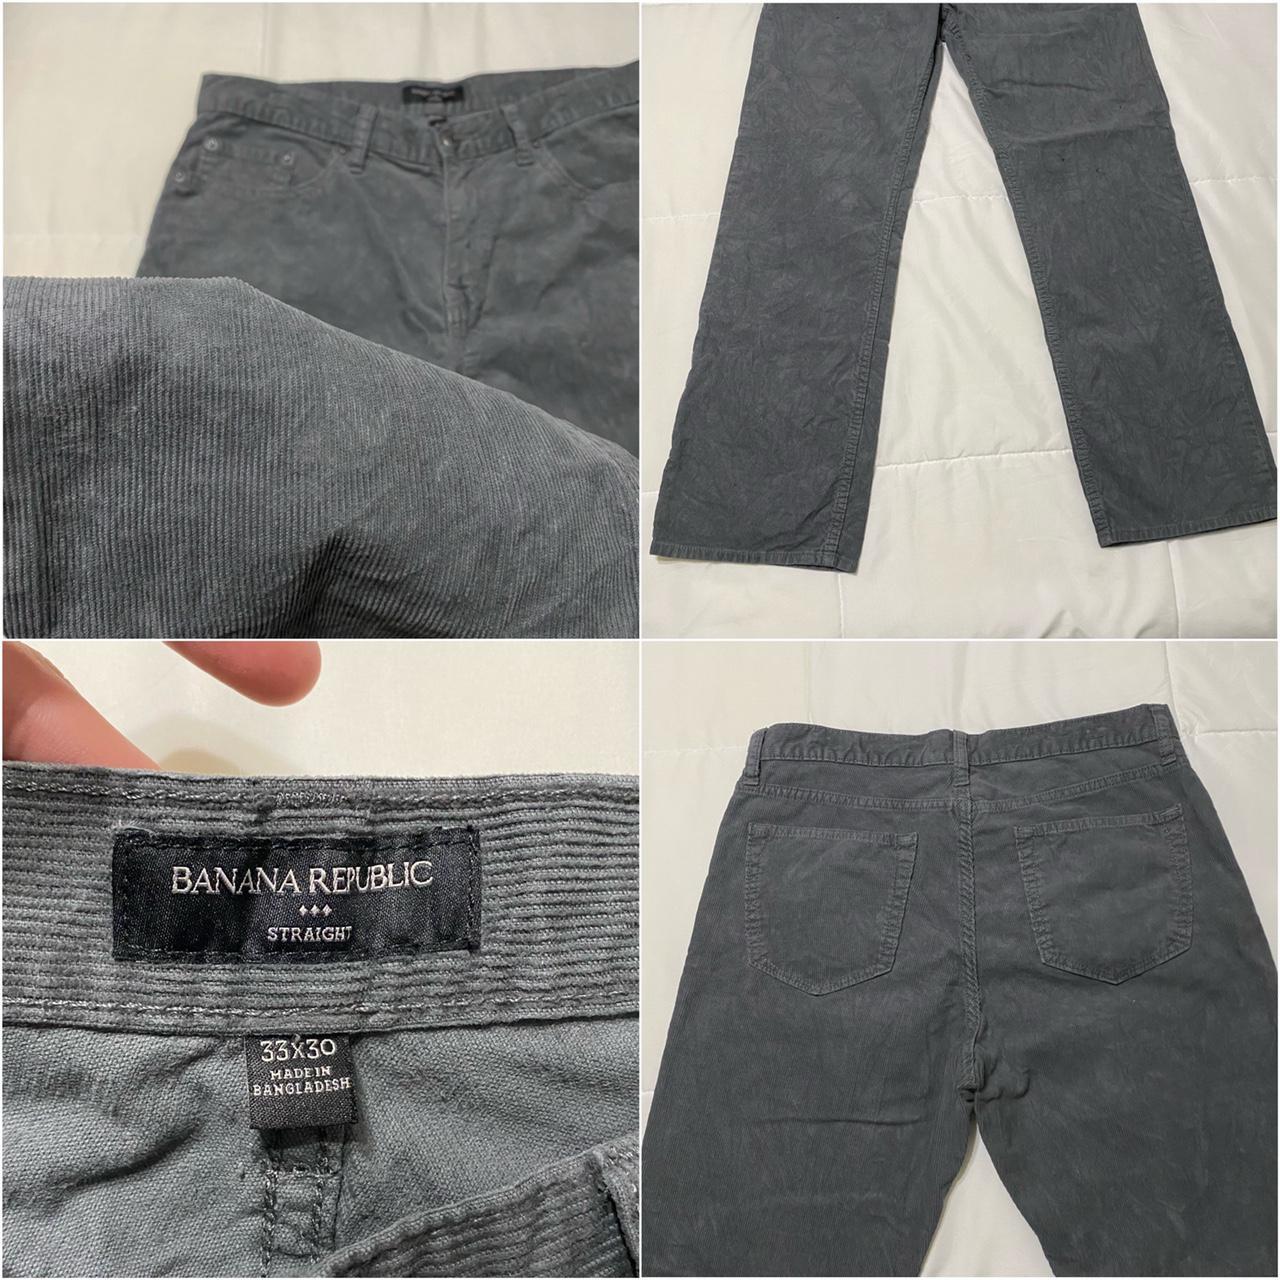 Product Image 4 - Banana Republic Grey Corduroy Pants
Very